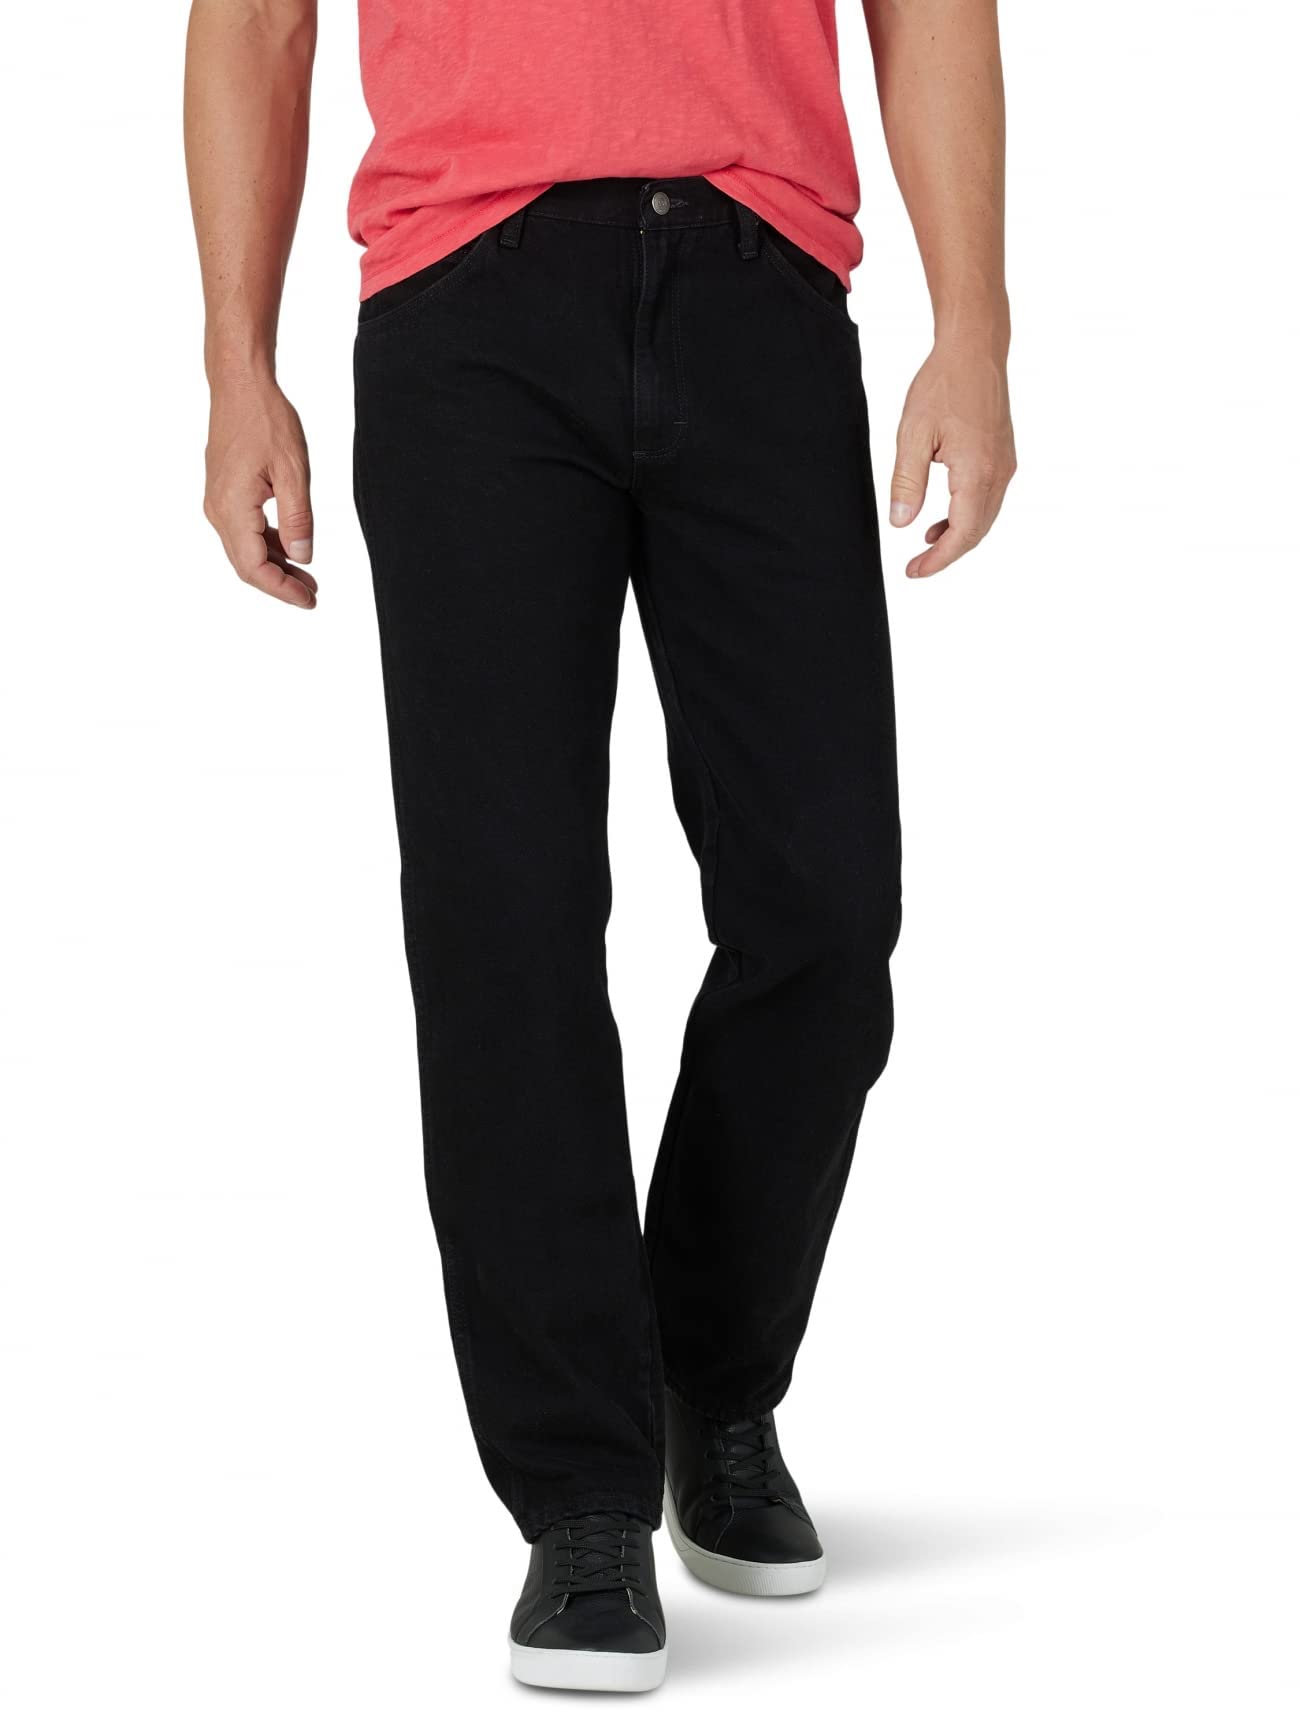 Wrangler Authentics Men's Big & Tall Classic 5-Pocket Regular Fit Cotton Jean, Black, 44W x 28L